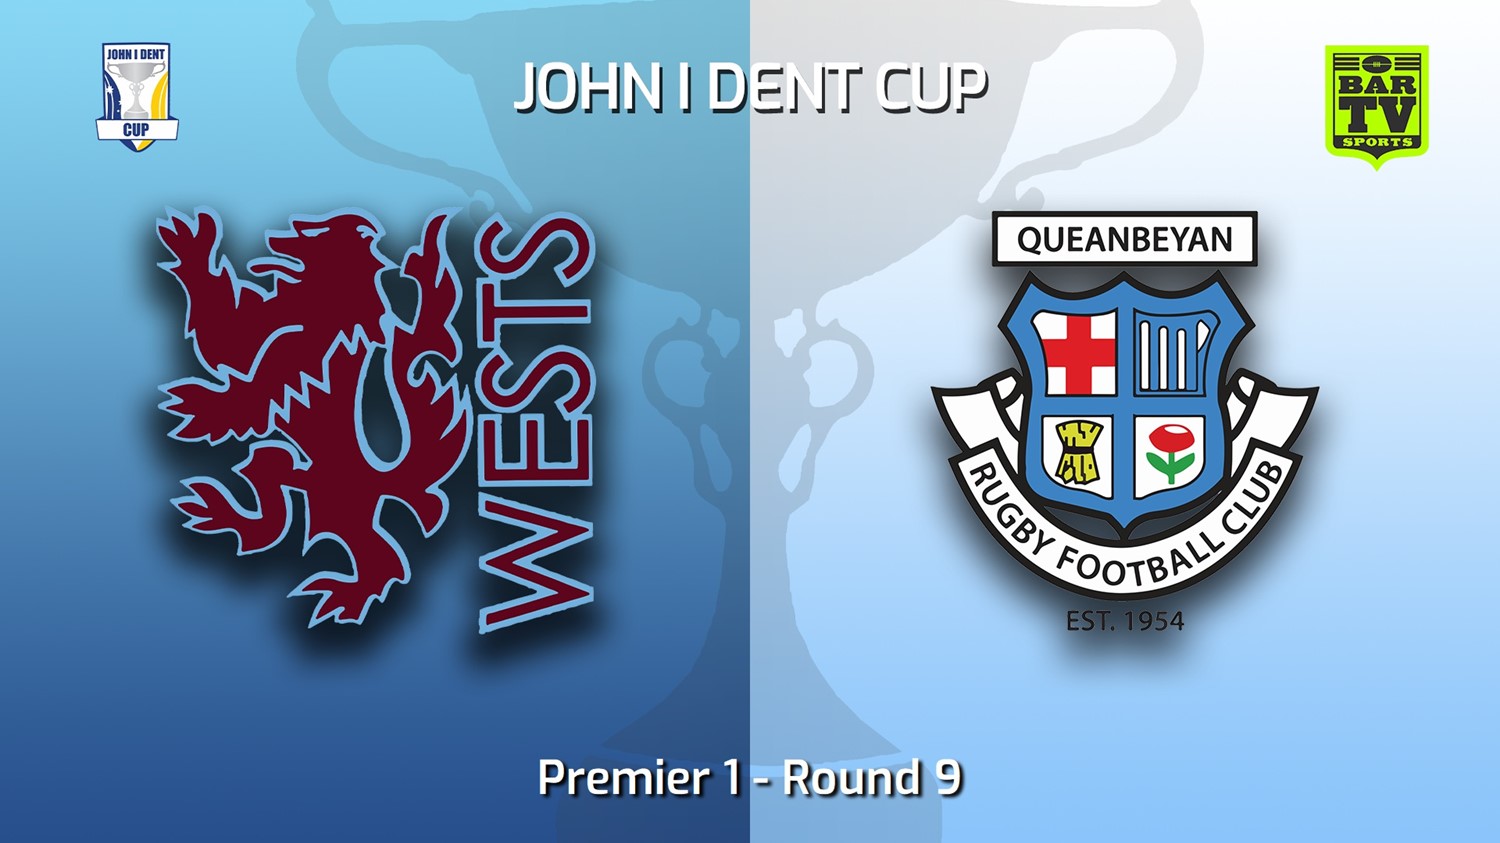 220625-John I Dent (ACT) Round 9 - Premier 1 - Wests Lions v Queanbeyan Whites Slate Image